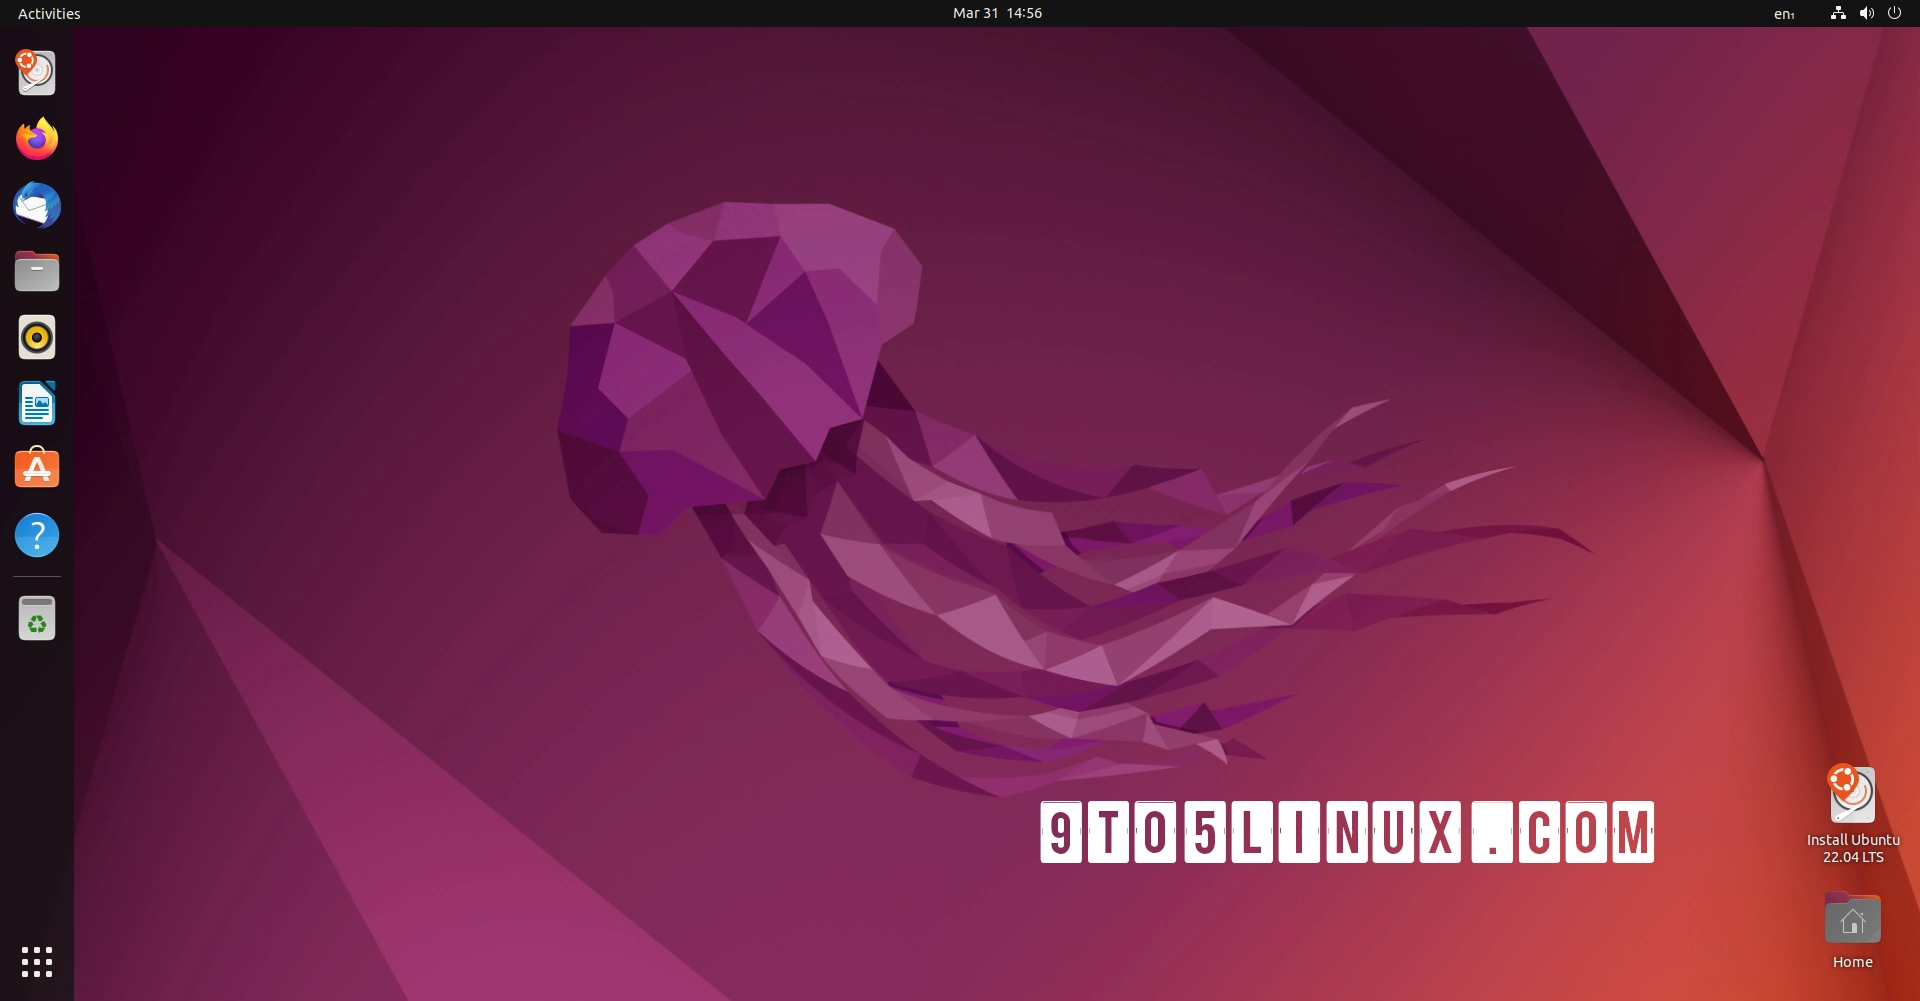 Ubuntu 22.04 LTS Beta Released with GNOME 42 Desktop, Linux Kernel 5.15 LTS